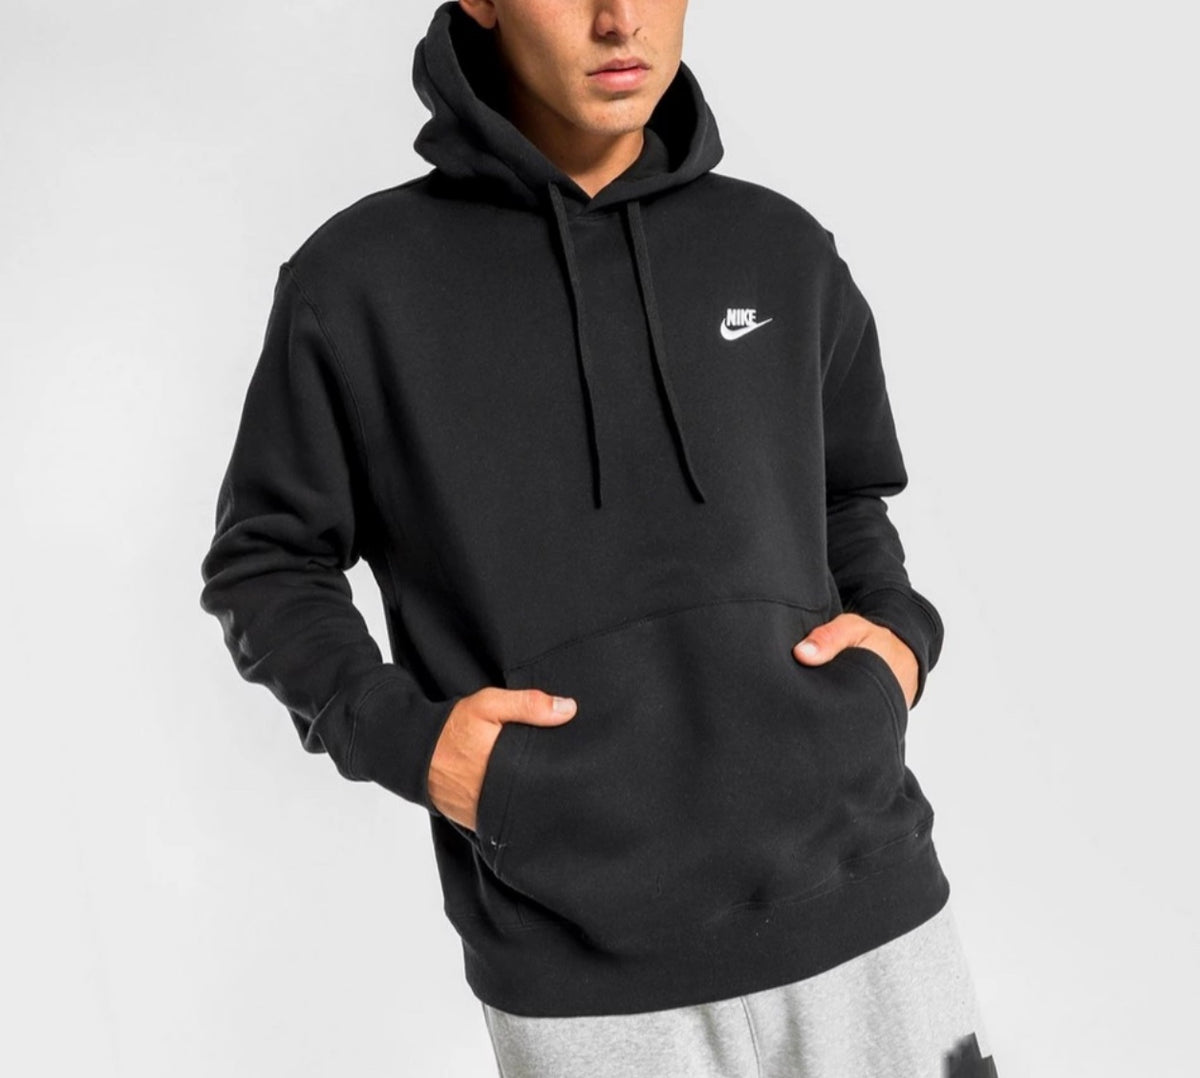 Men's Adidas Tiro21 3/4 Pant Black  Shop Now – Sneakers Direct Sydney